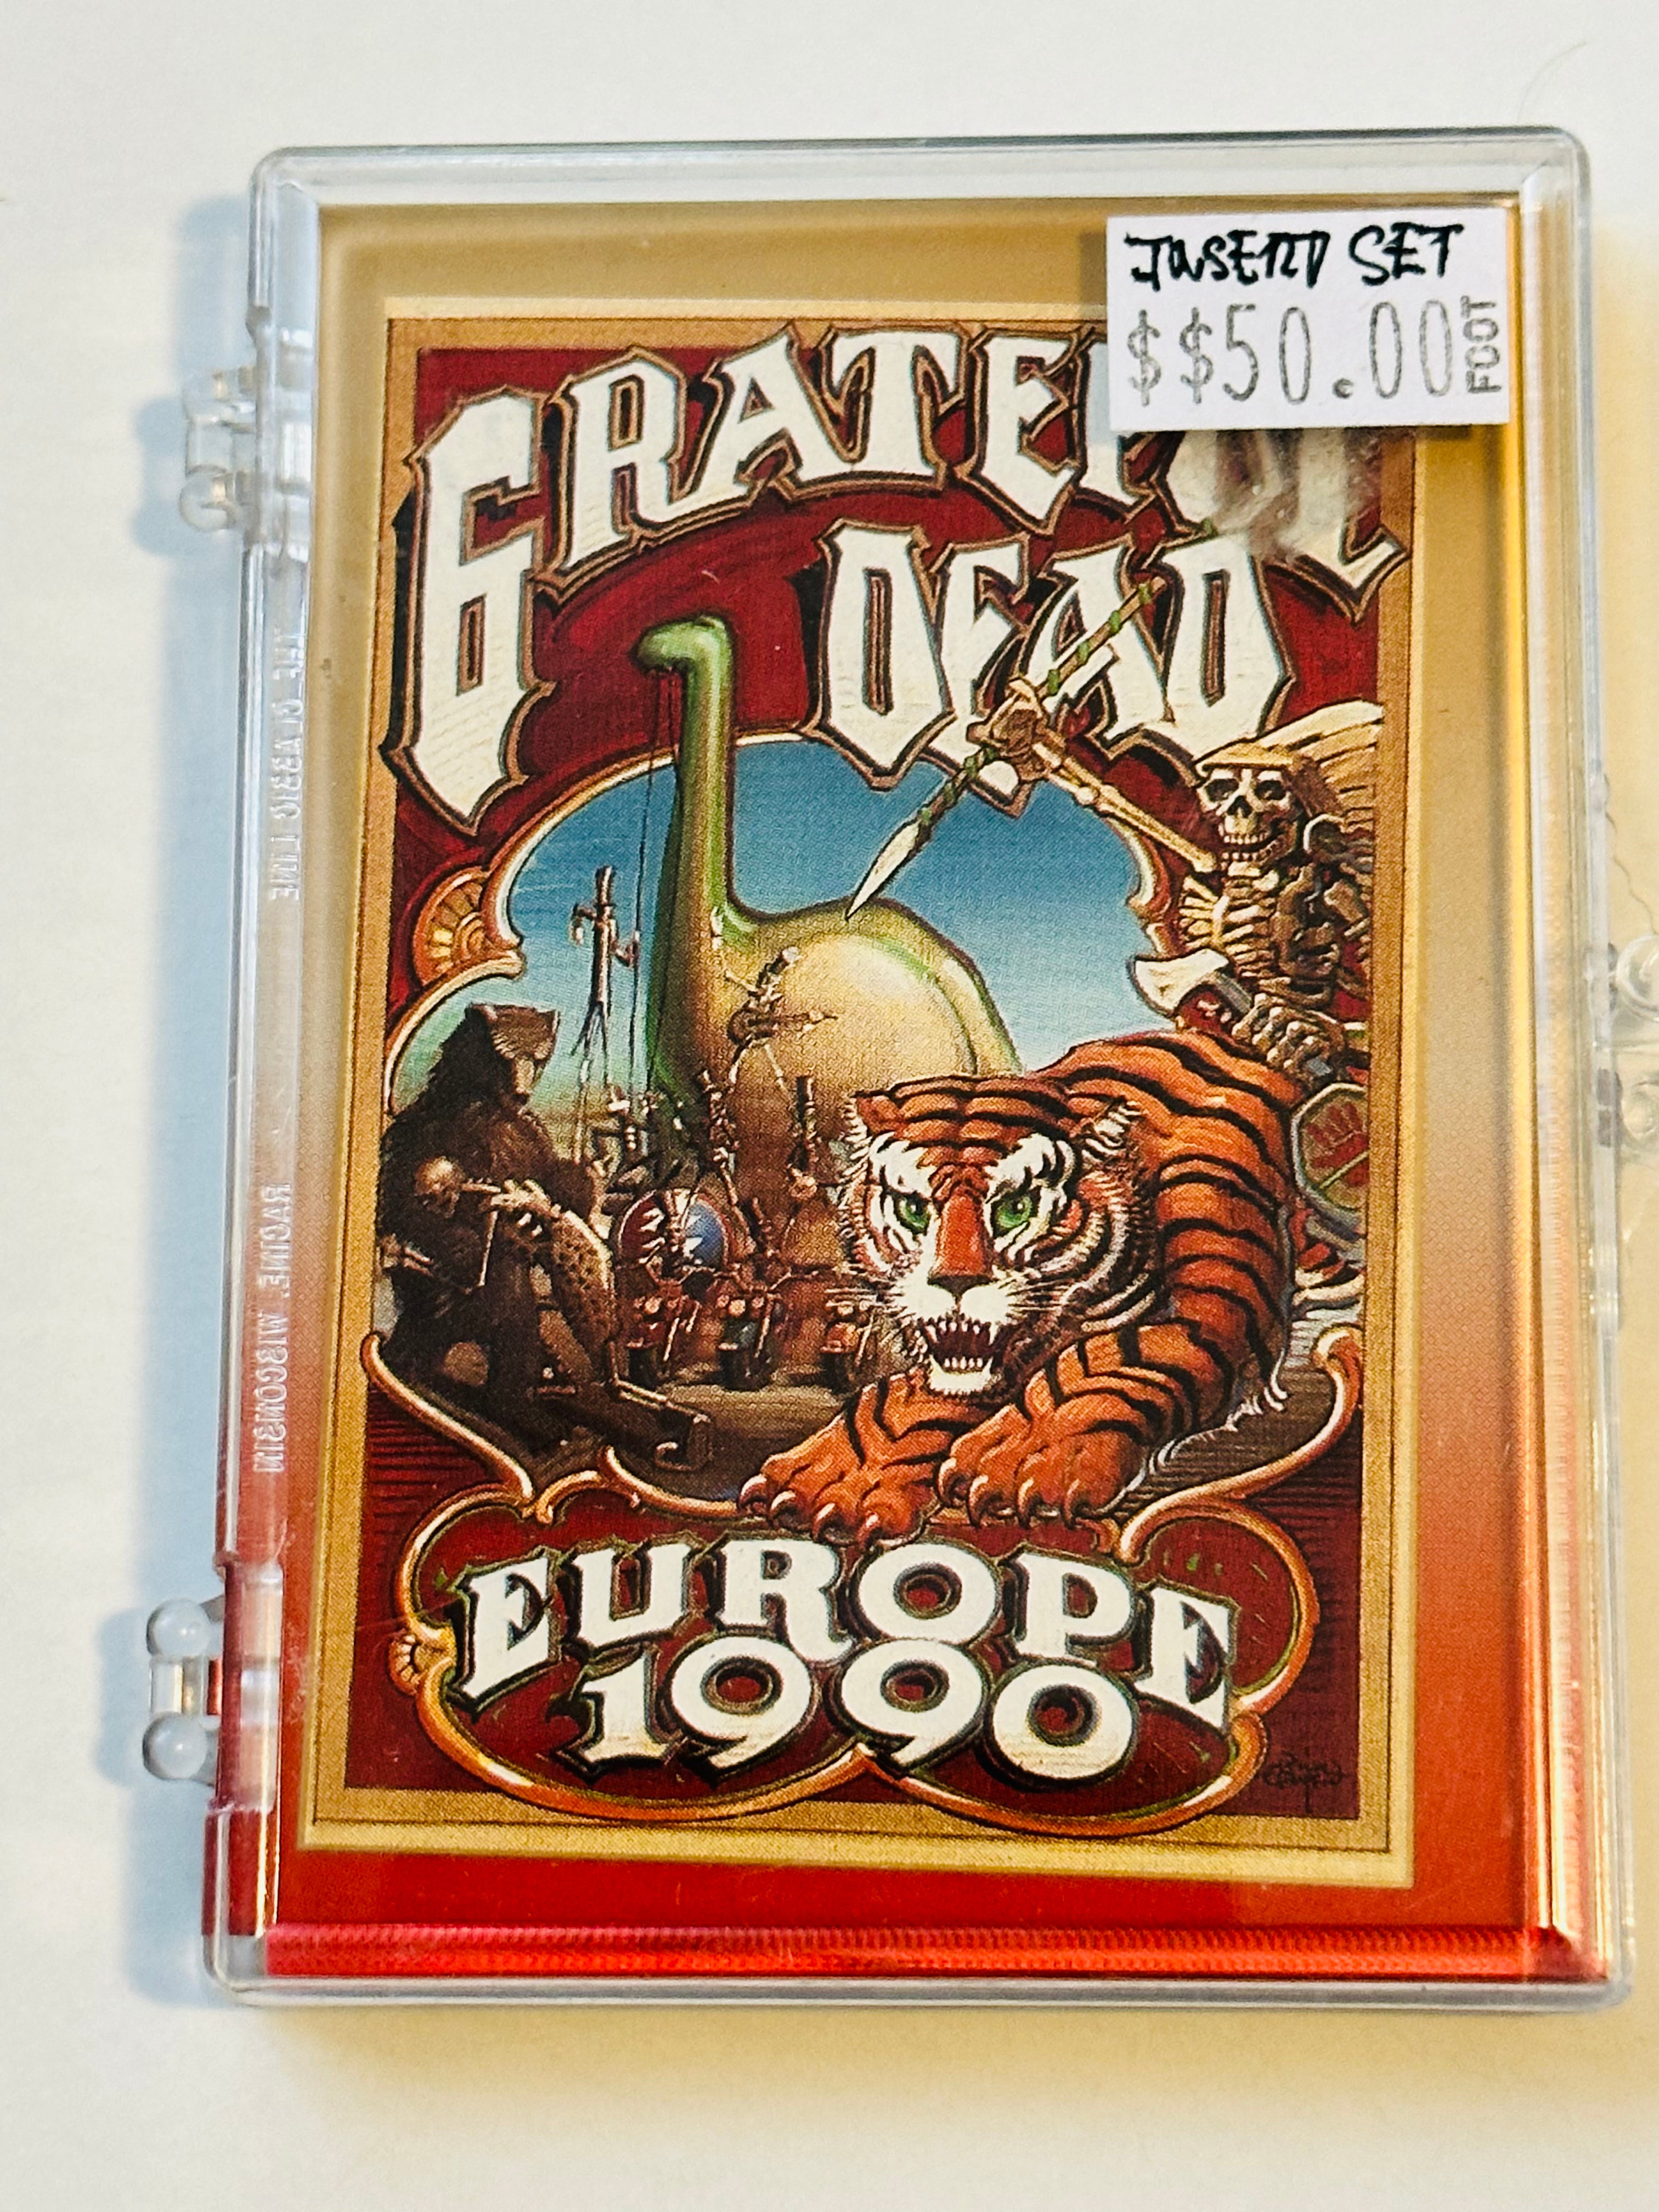 Grateful Dead rare insert cards set 1991